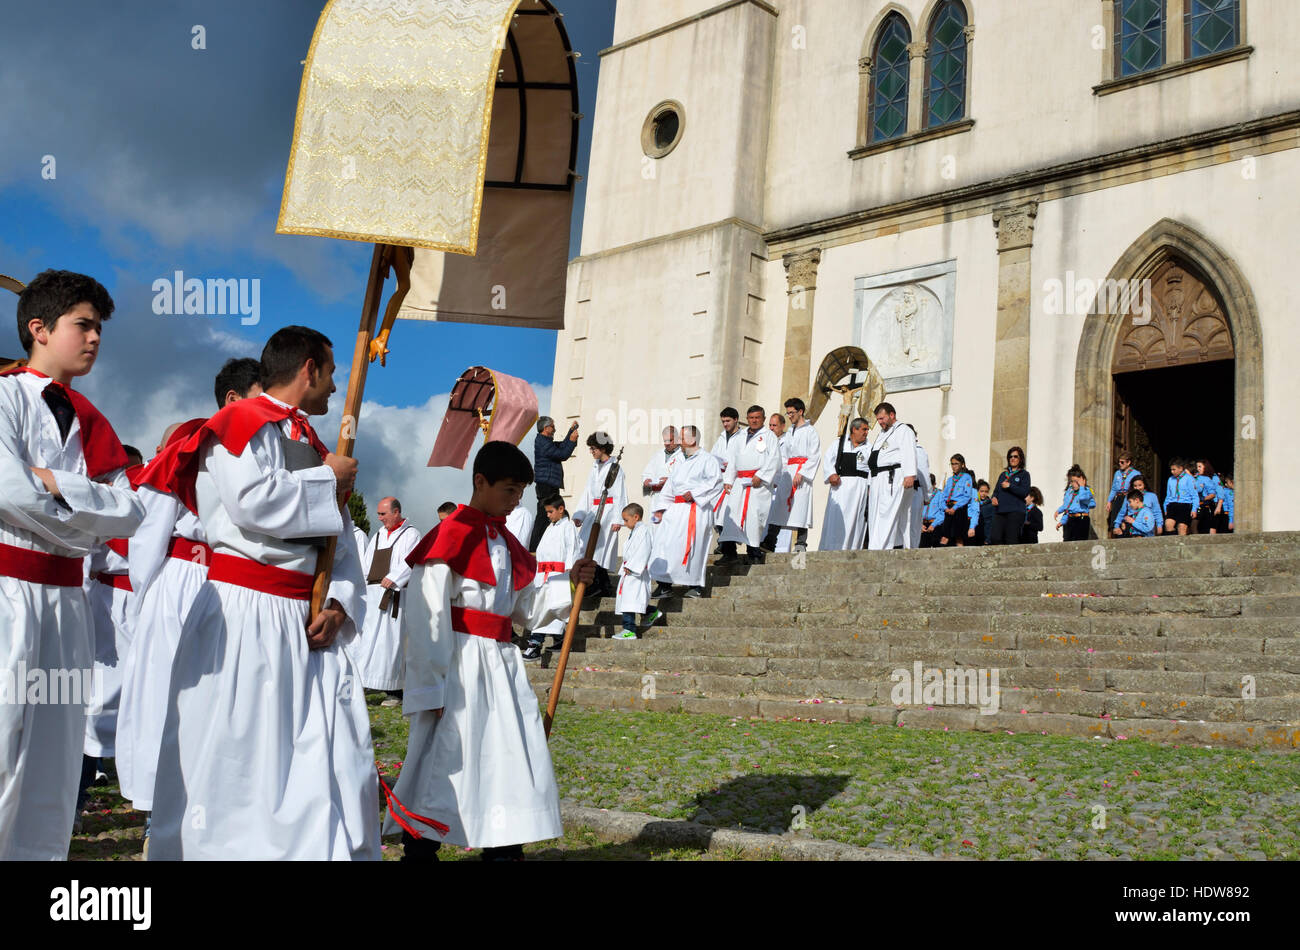 Religious procession; Seneghe, Oristano province, Sardinia, Italy Stock Photo